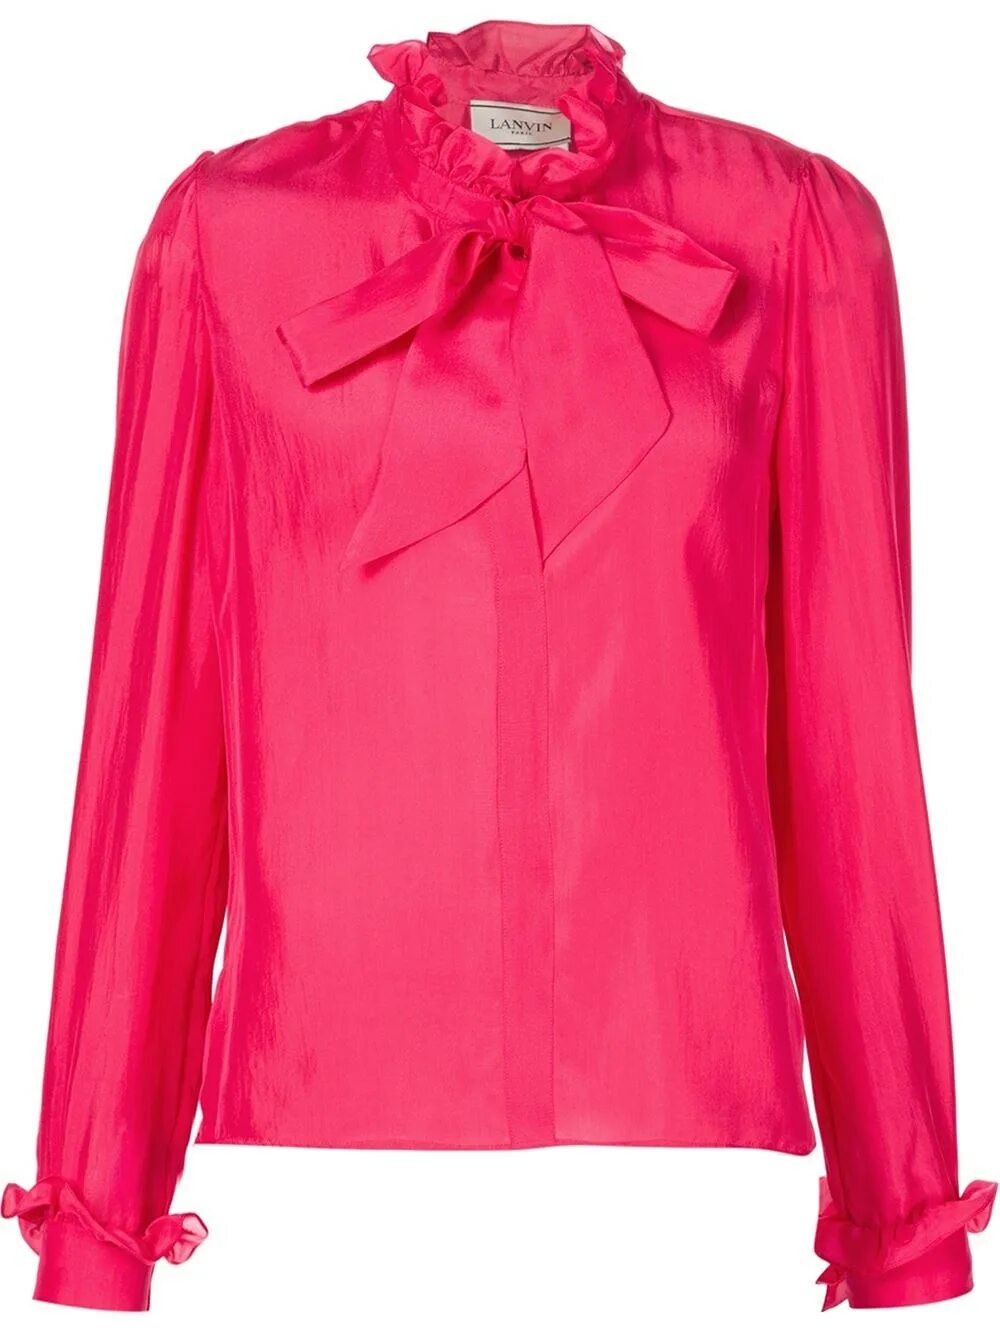 Женские блузки розовые. Шёлковая блузка Ланвин. Блуза Lanvin блузка. Ярко розовая блузка. Розовая блузка женская.